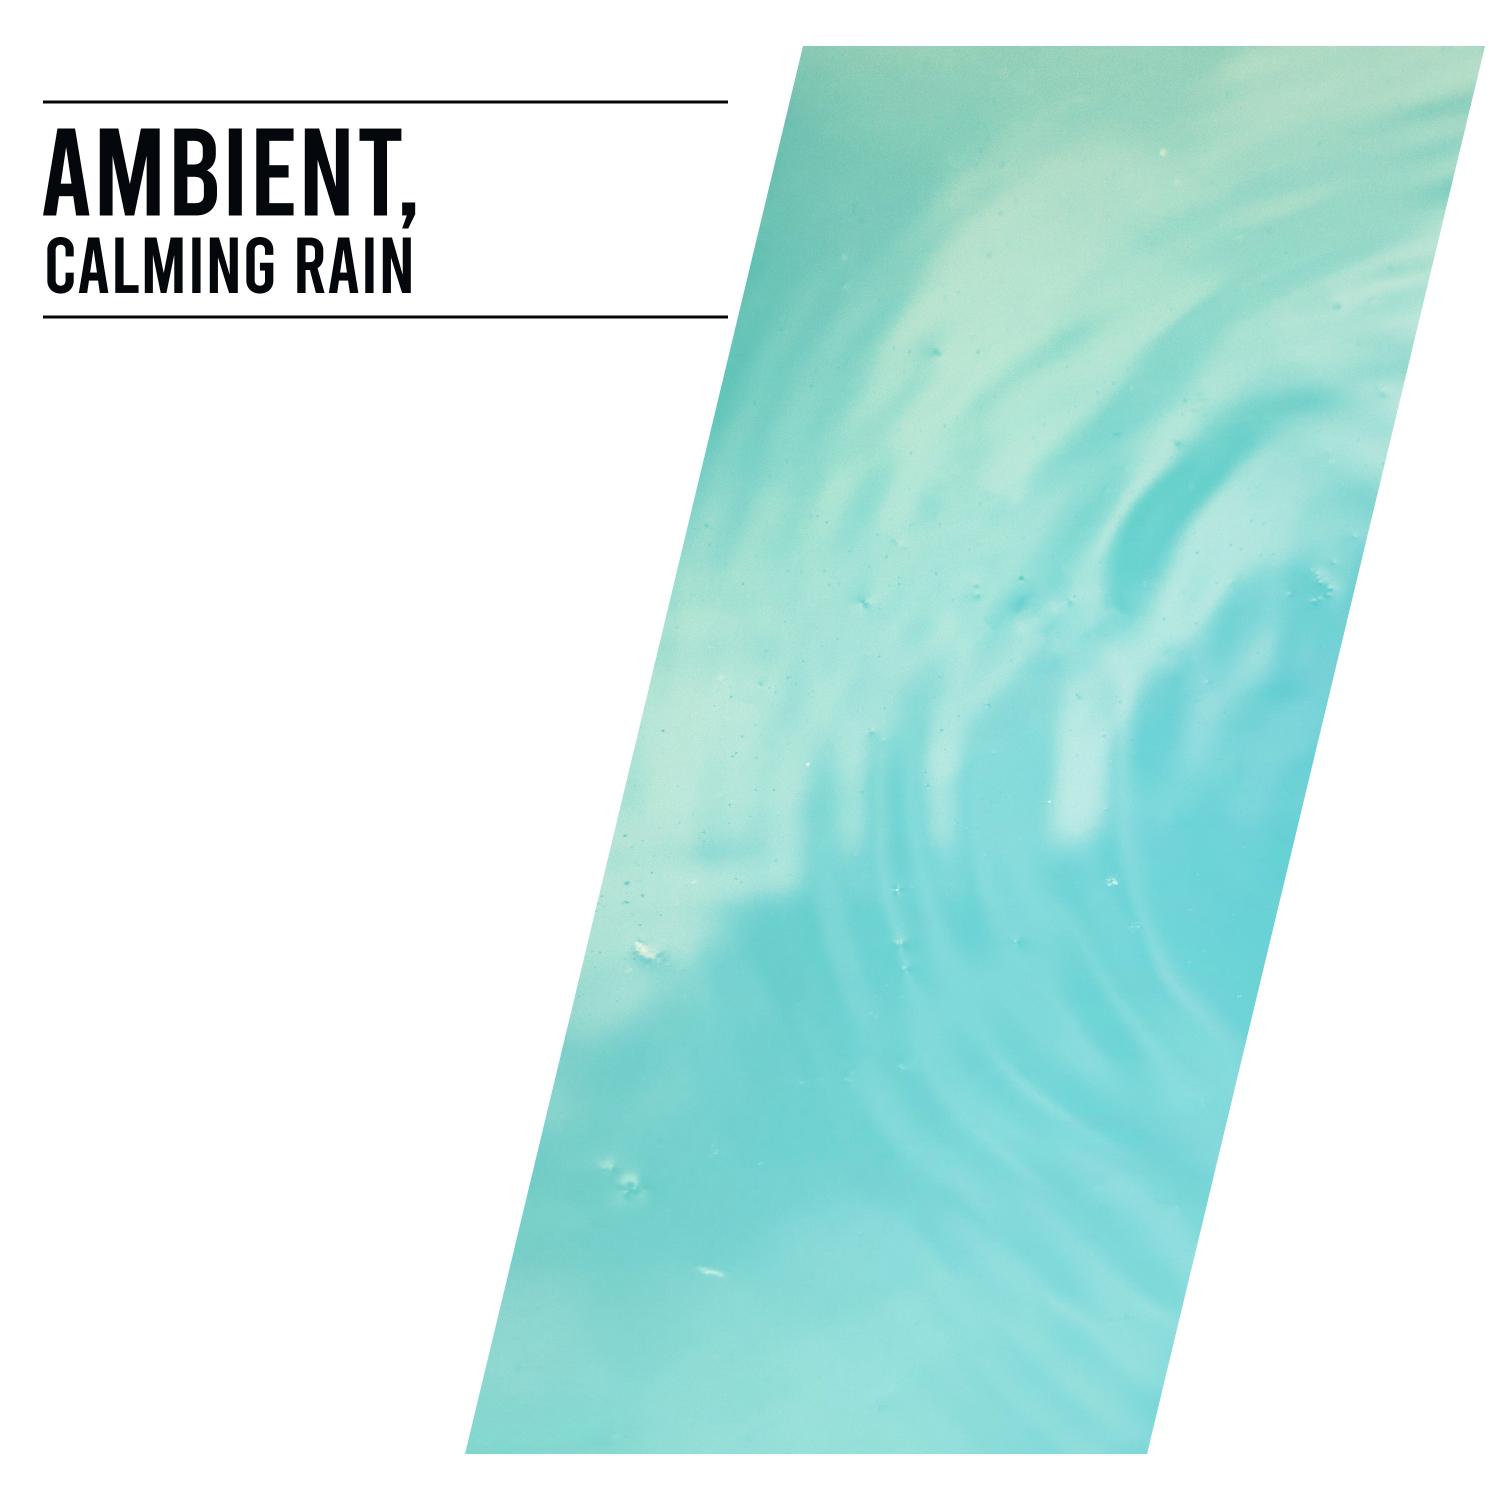 14 Ambient, Calming Rain Sounds